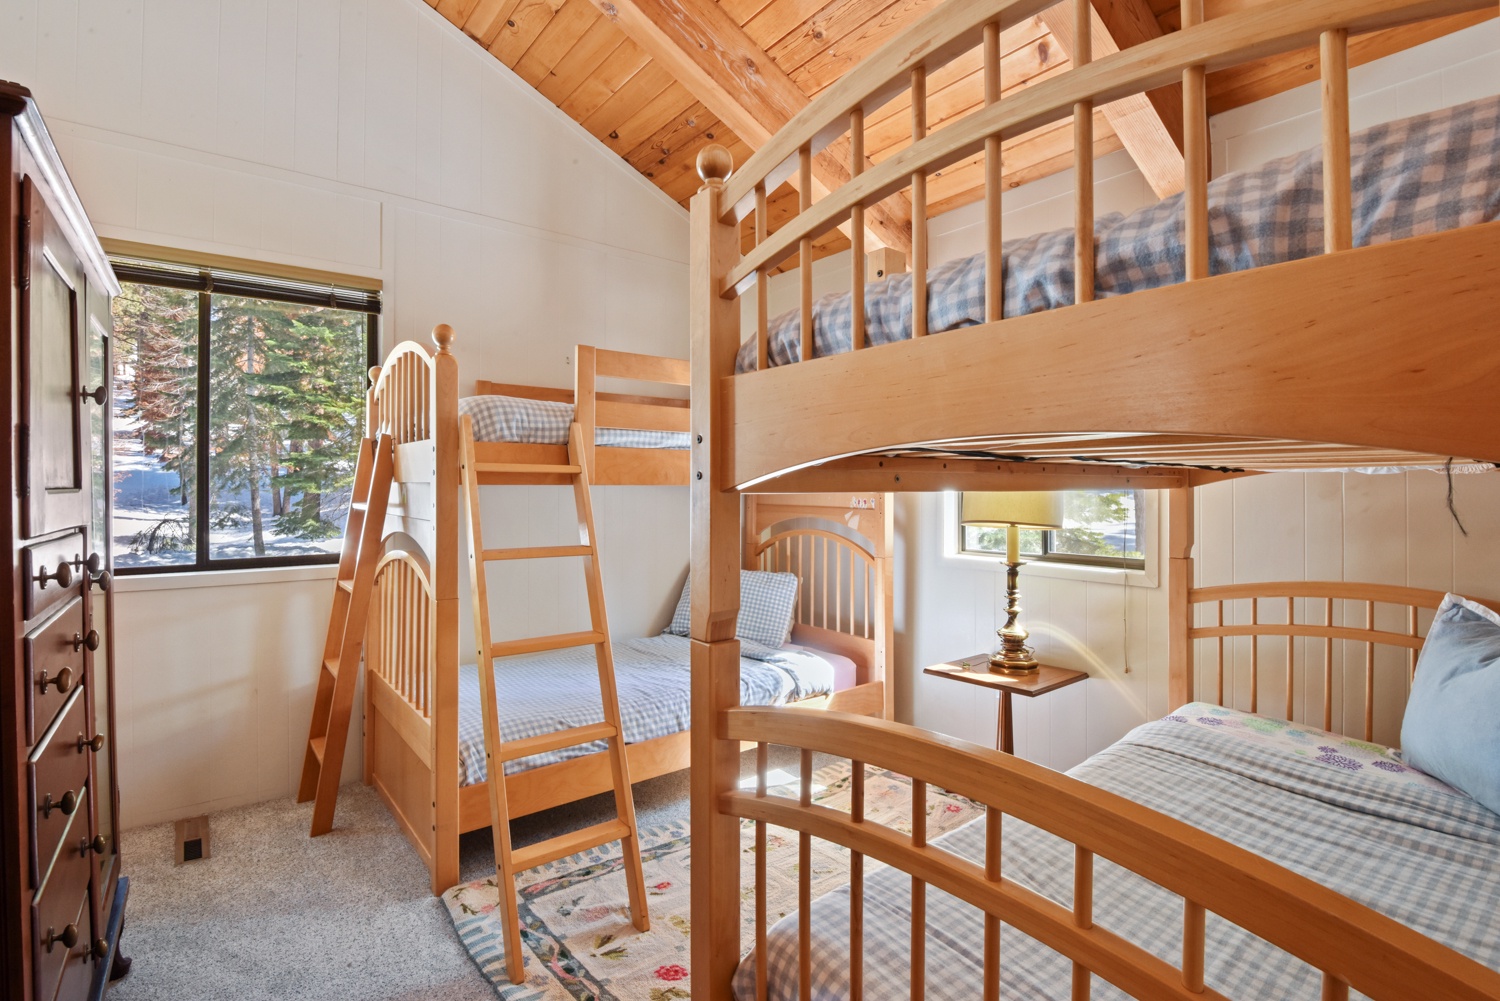 Bedroom 3 with 2 bunk beds